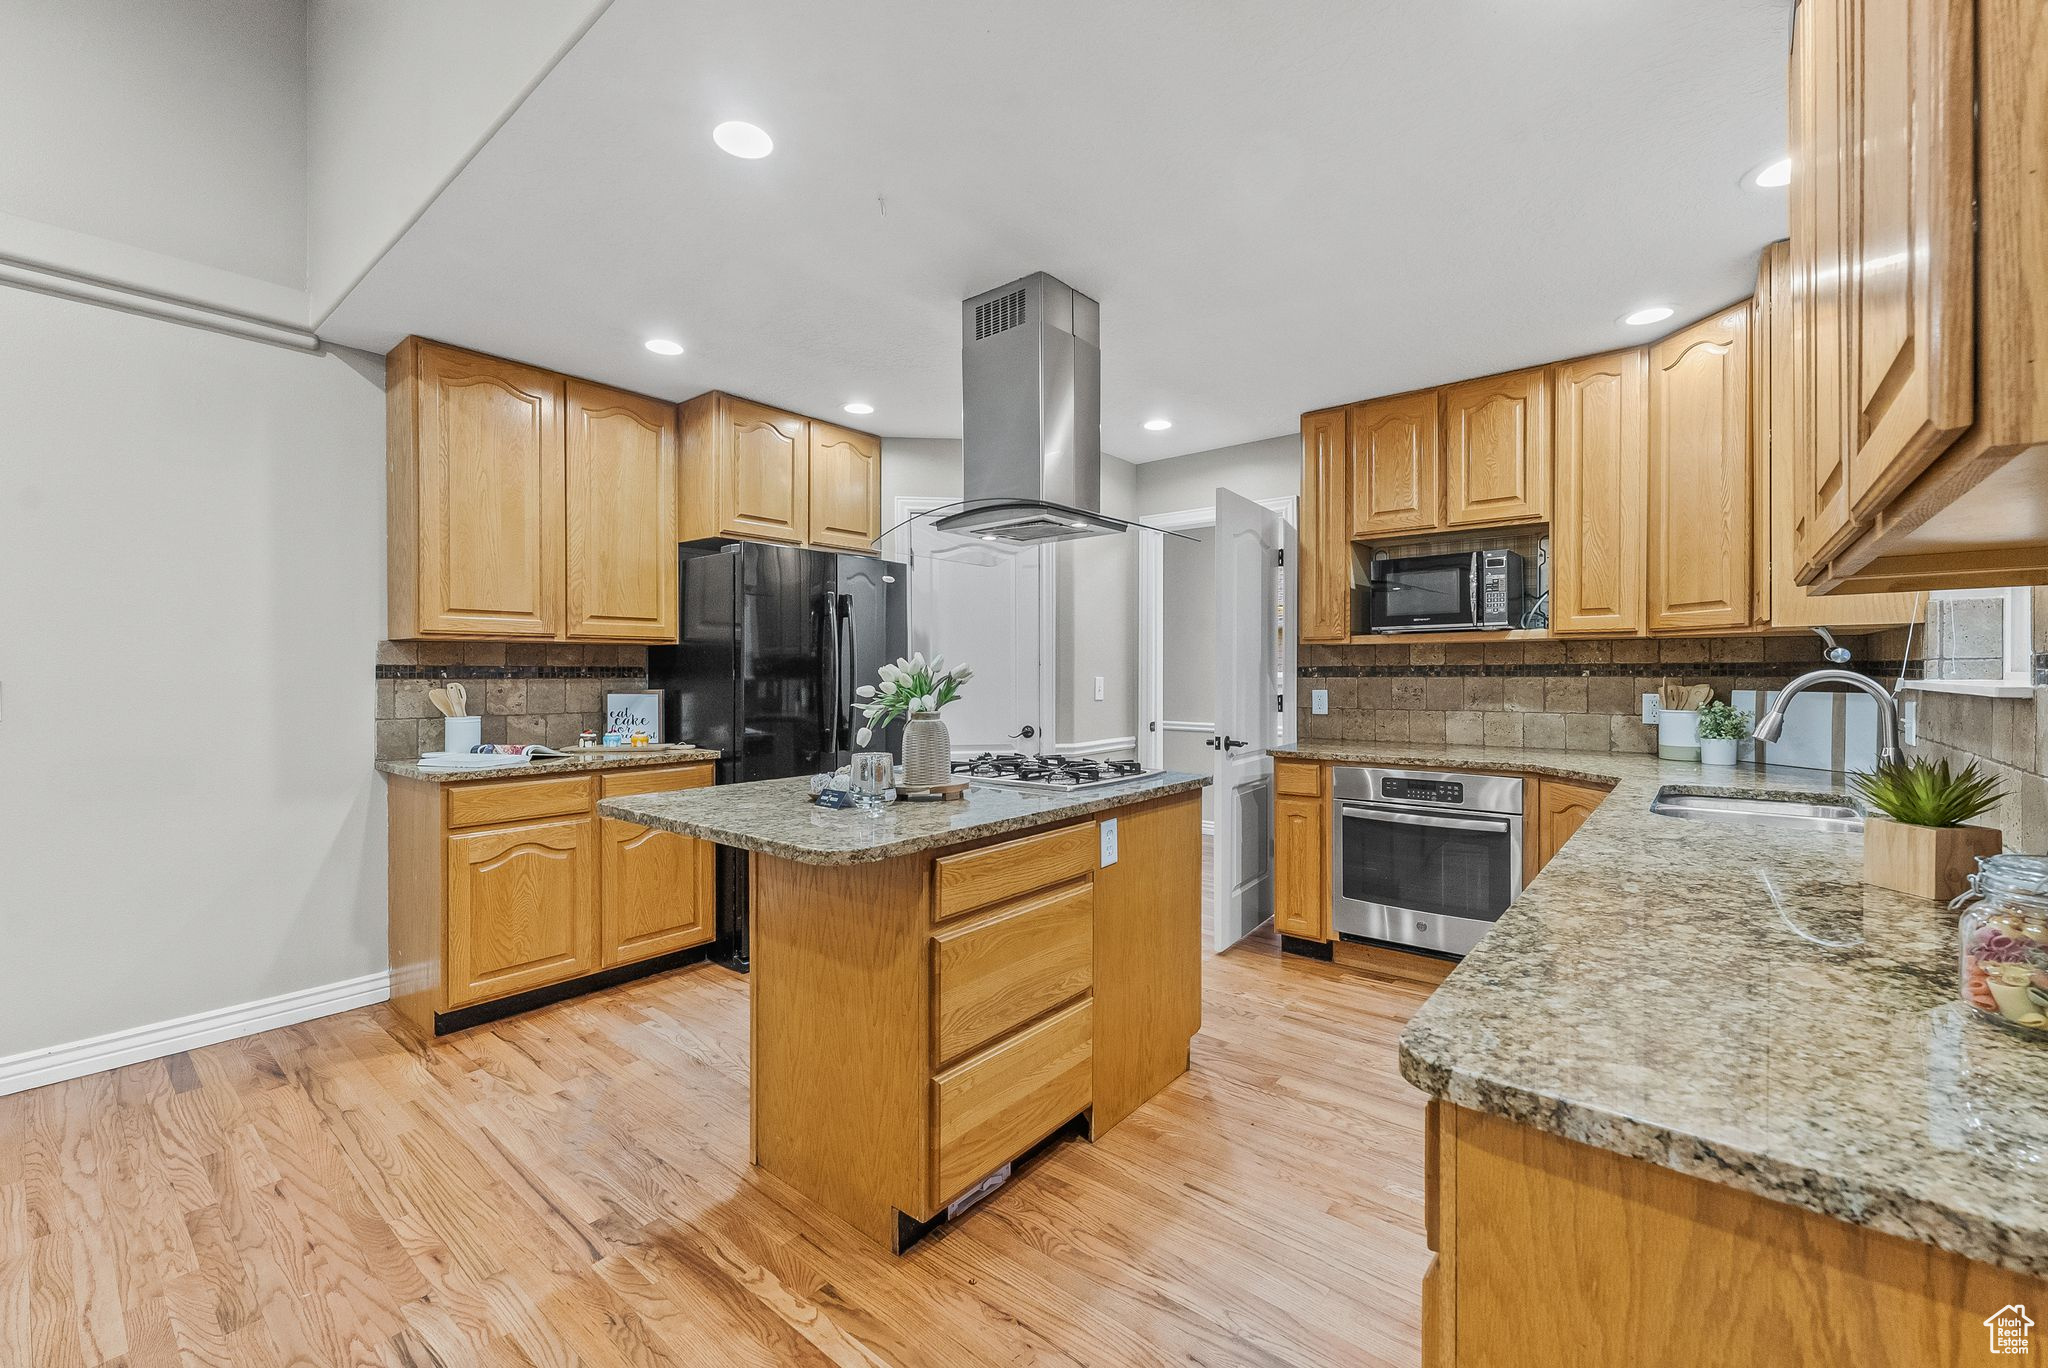 Kitchen with island range hood, black appliances, tasteful backsplash, sink, and light wood-type flooring